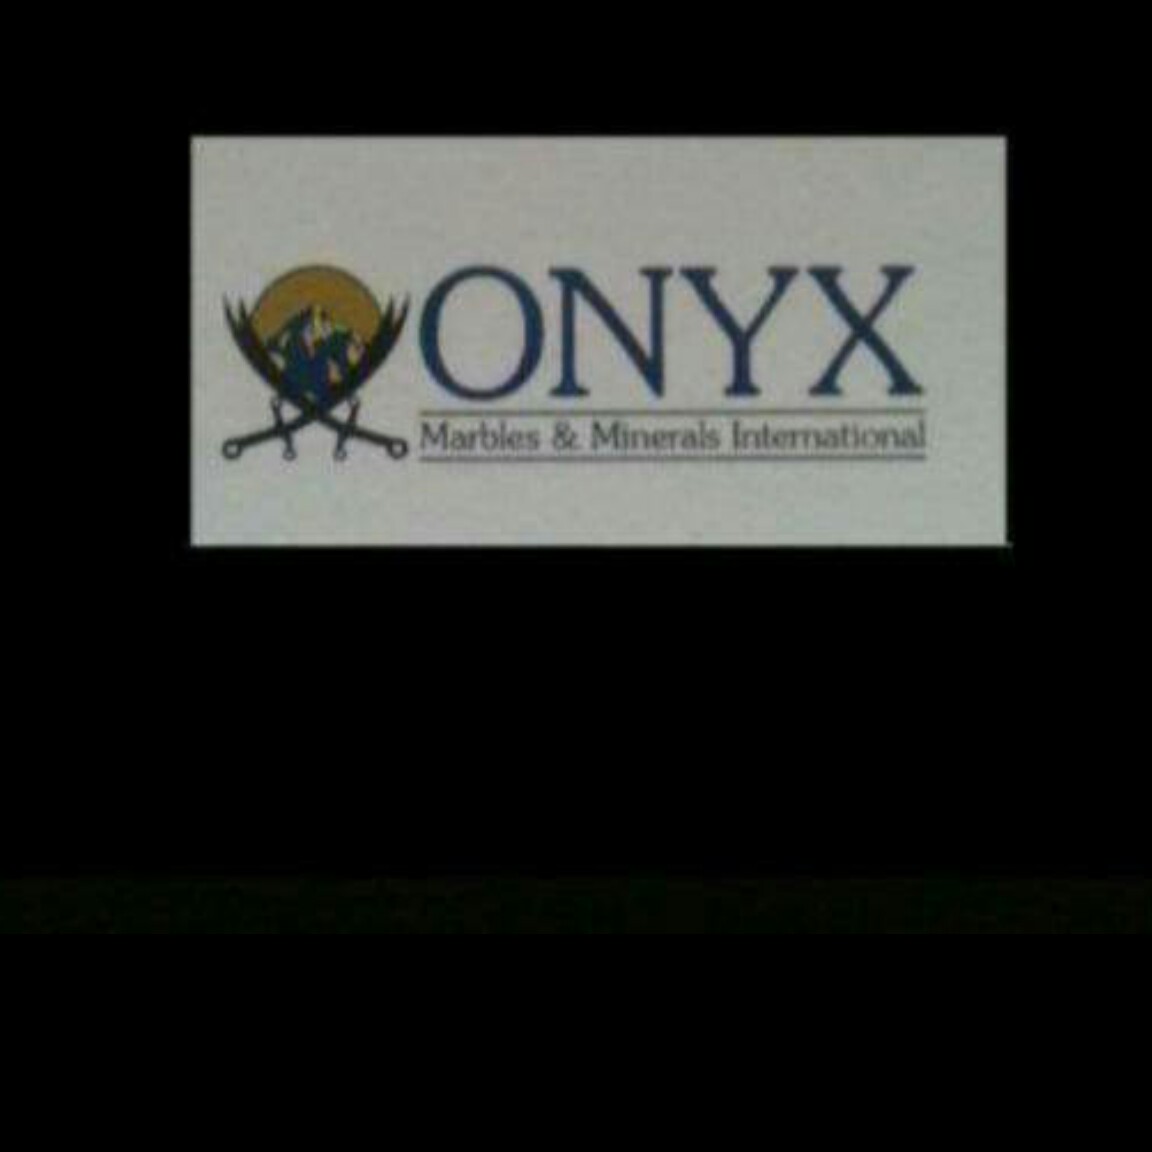 Onyx Marble Minerals International